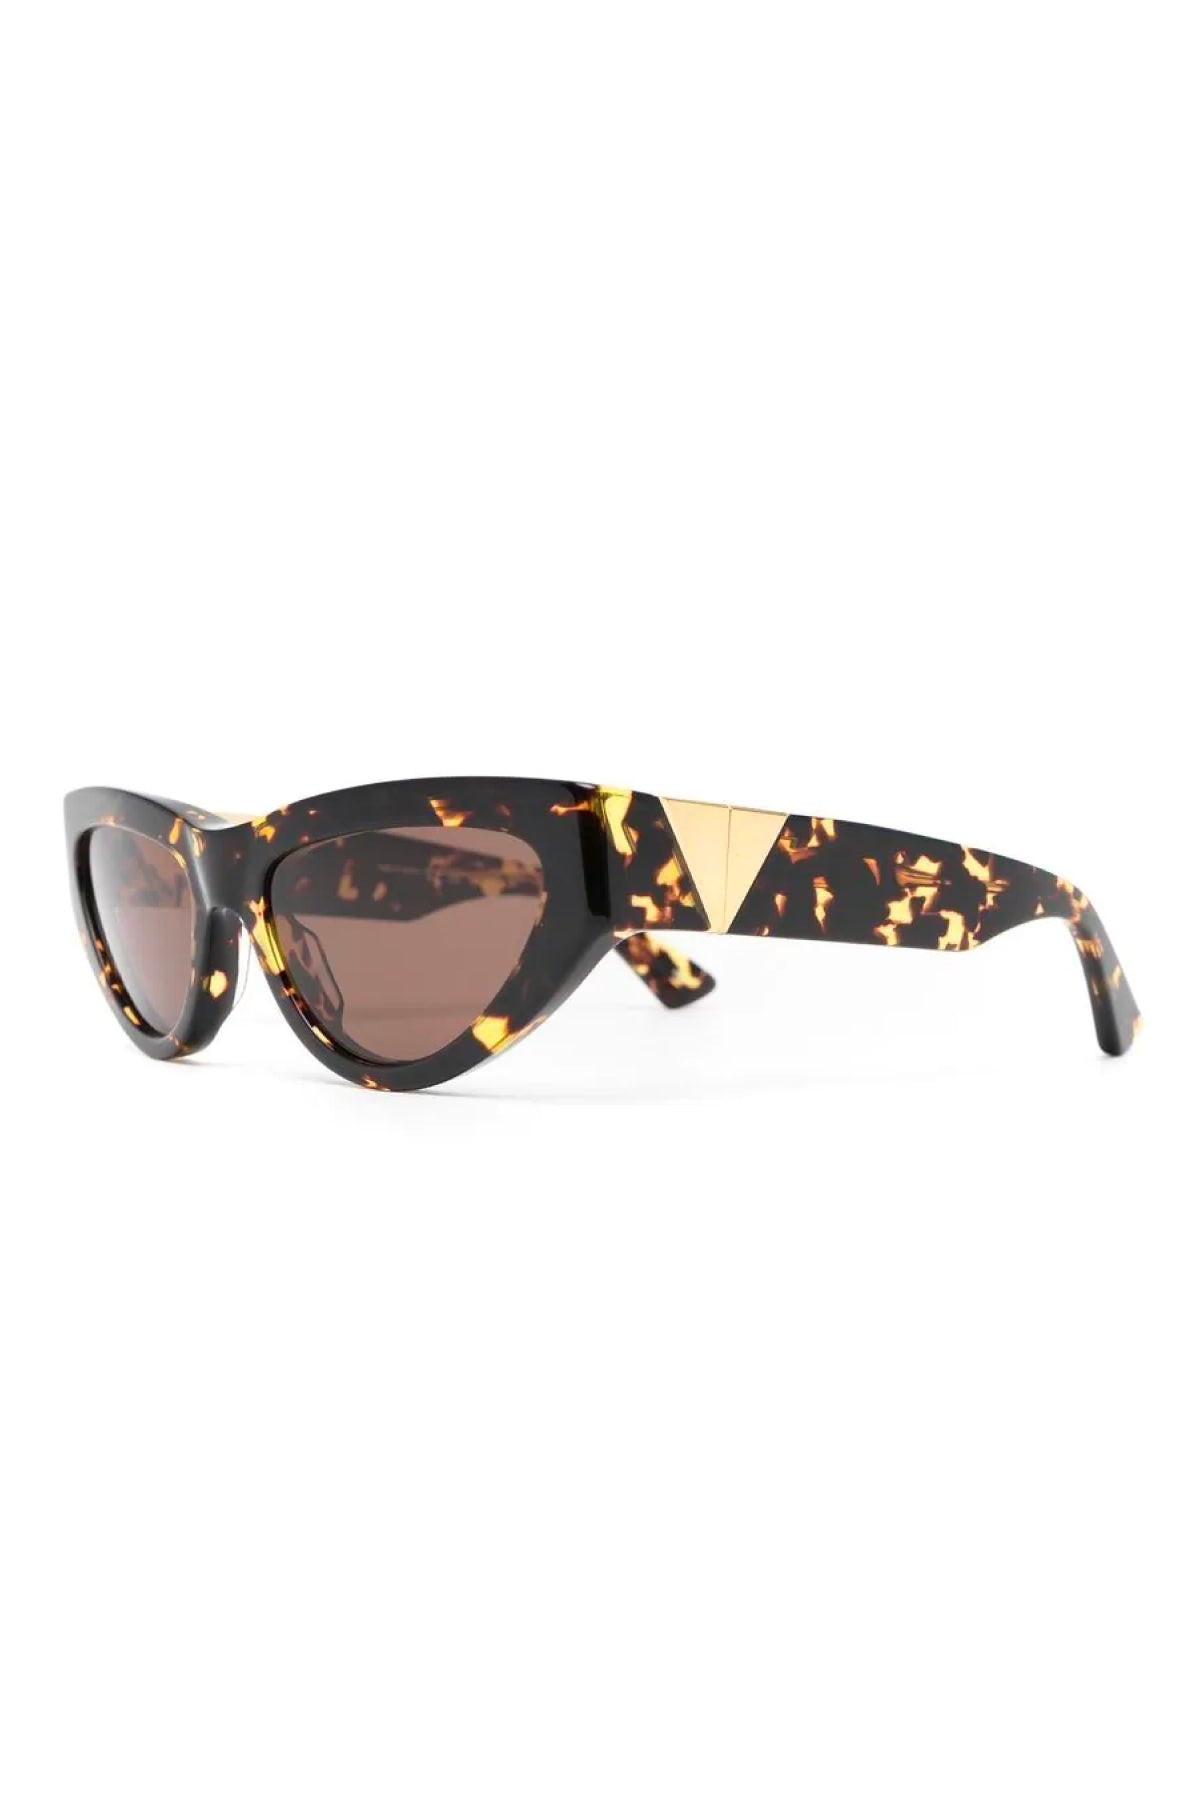 Bottega Veneta Cat-Eye Frame Sunglasses - Havana